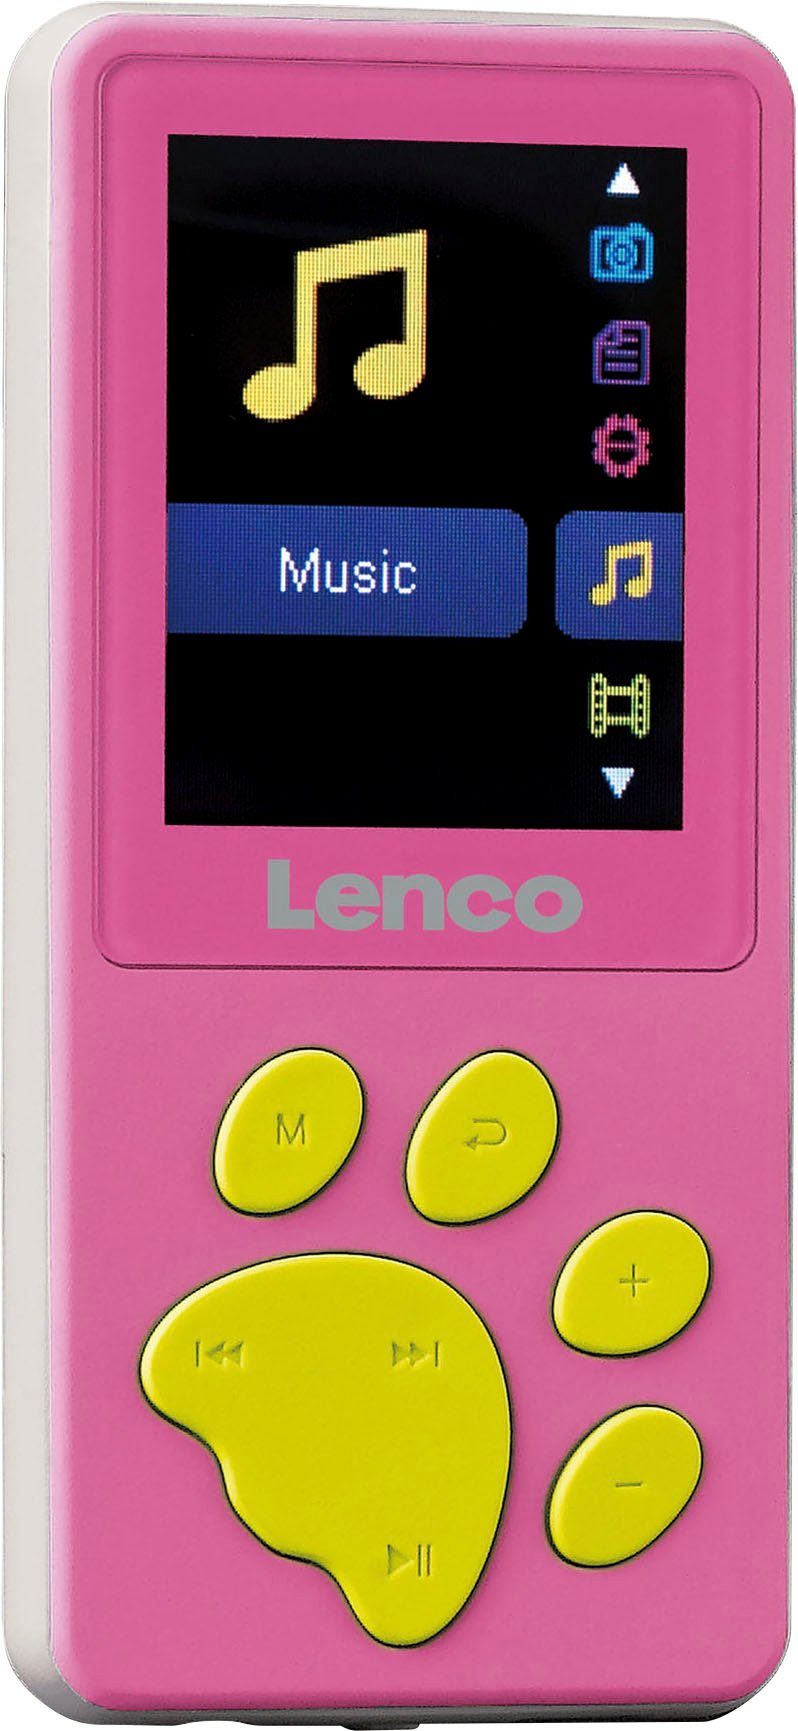 GB) MP3-Player MP4-Player Pink Xemio-560 Lenco (128